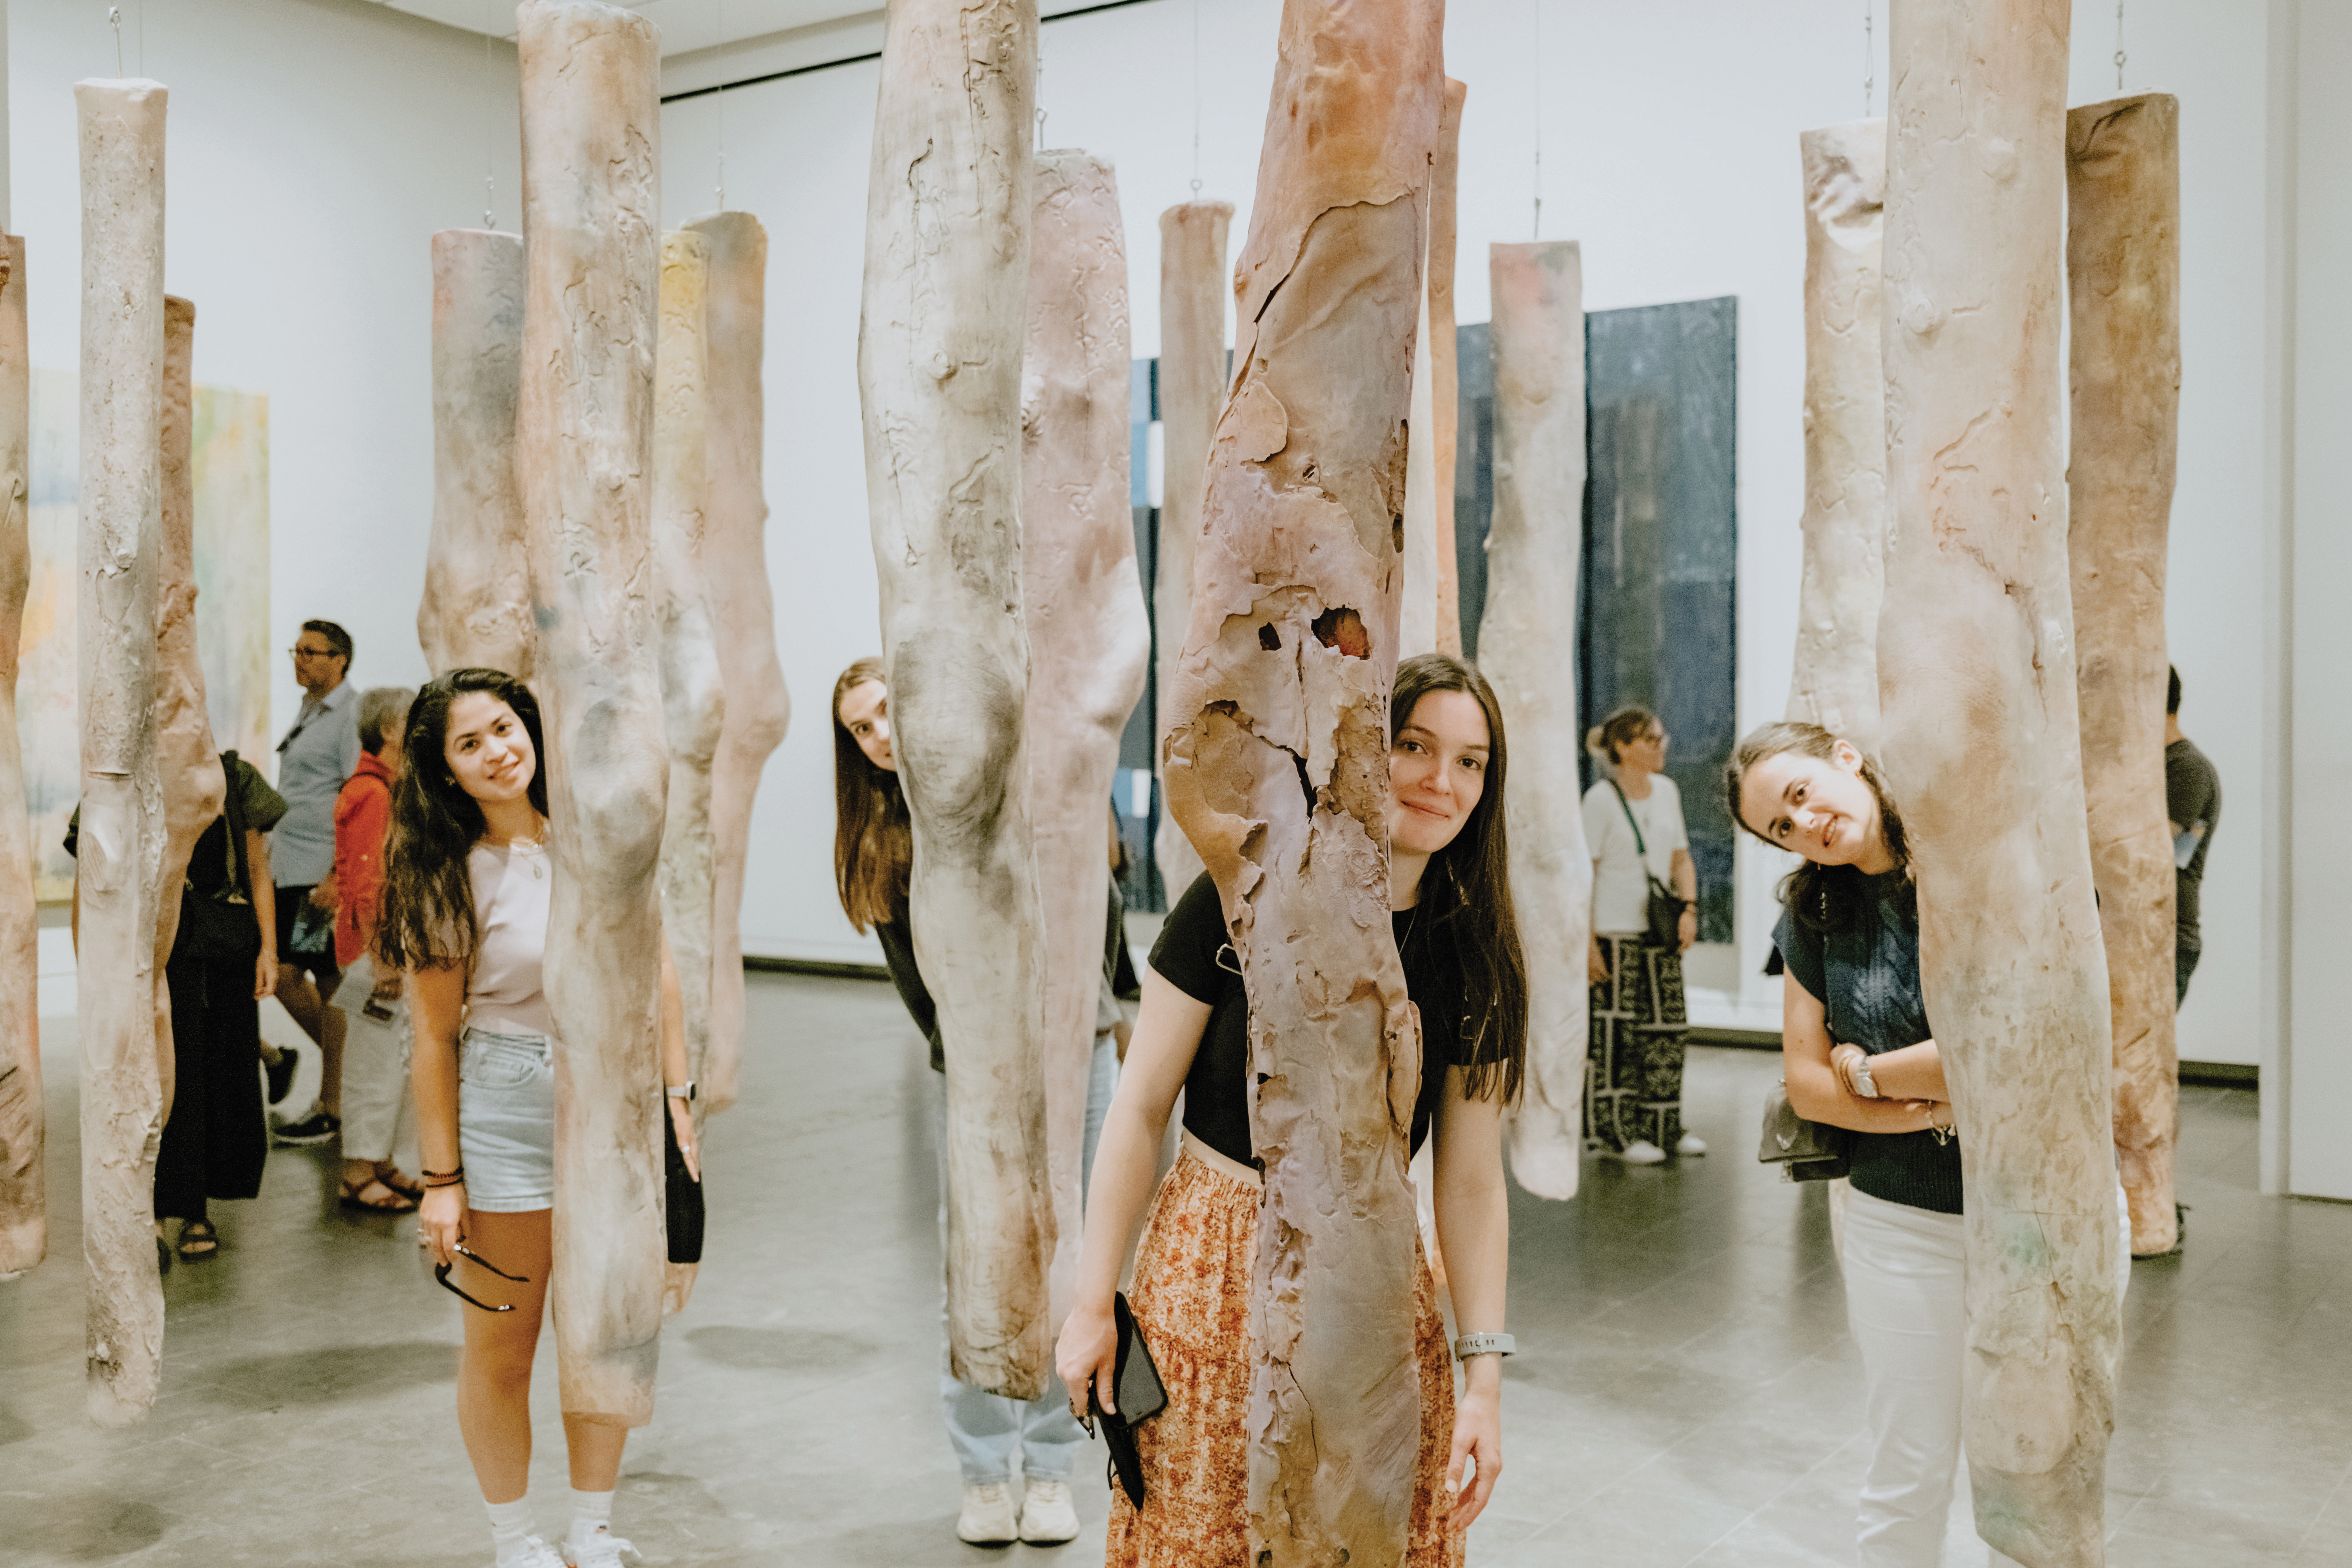 Students inside the Louisiana Museum of Modern Art